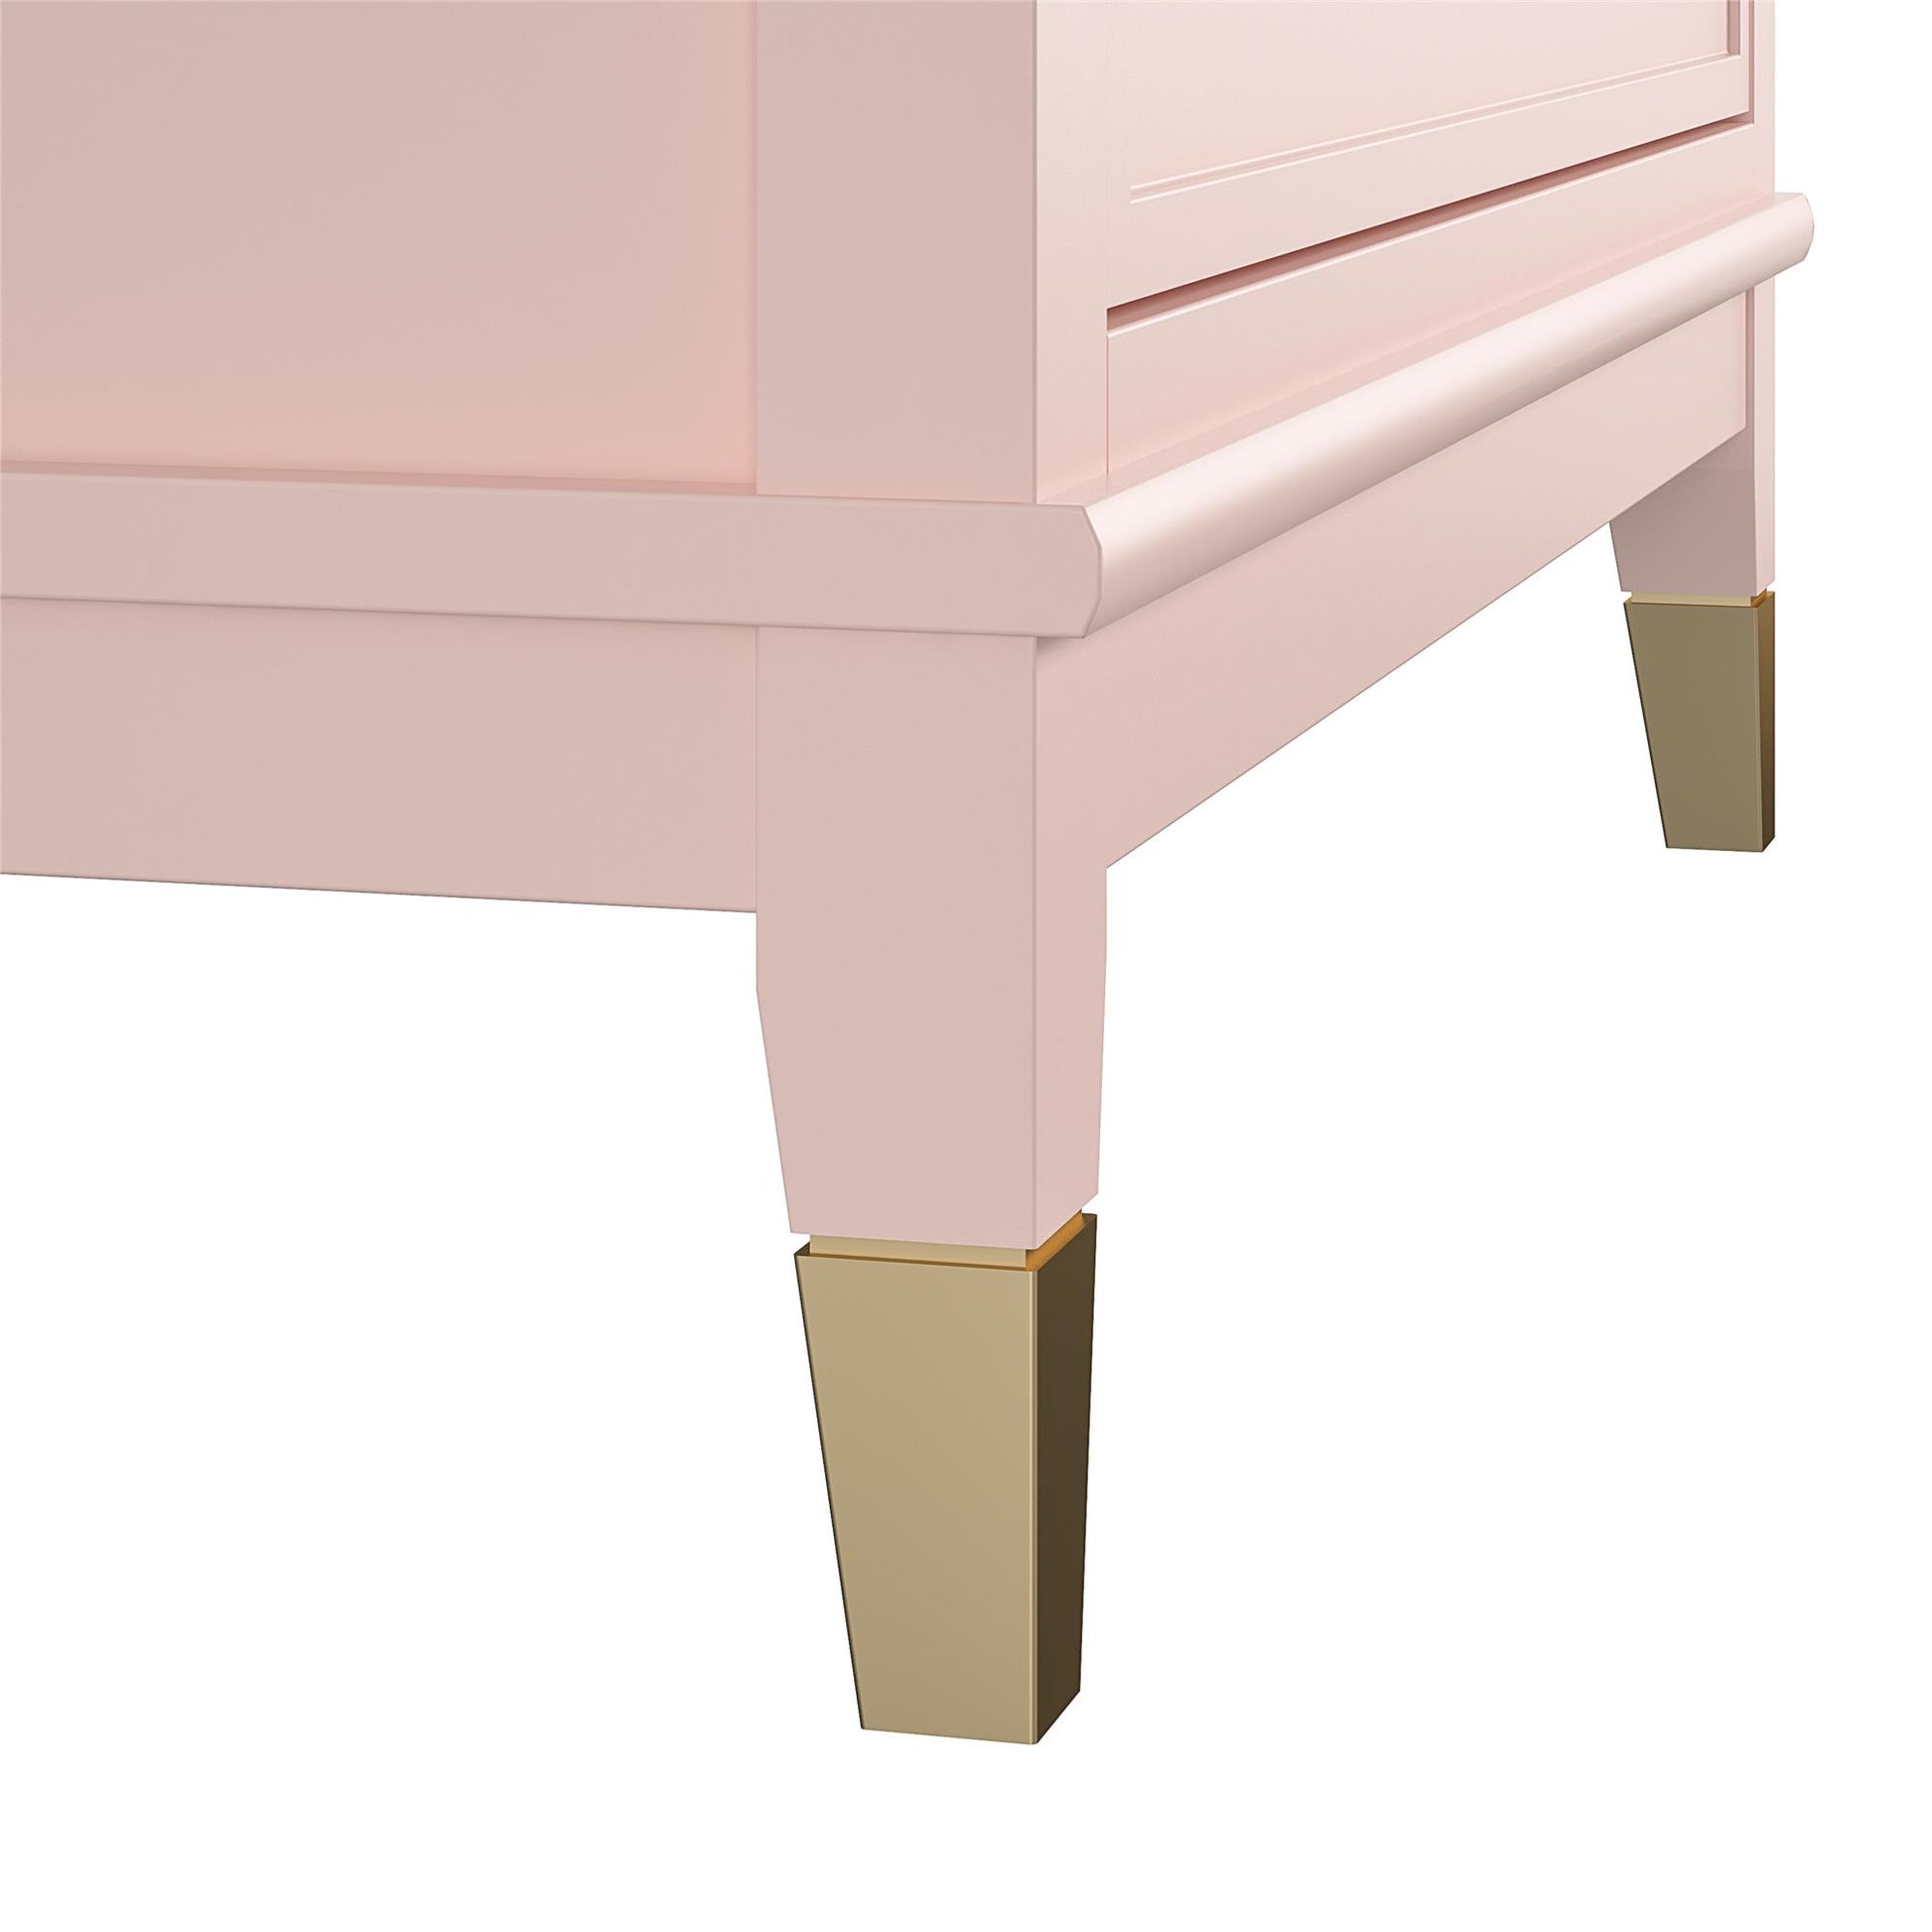 Westerleigh 4 Drawer Dresser - Pink